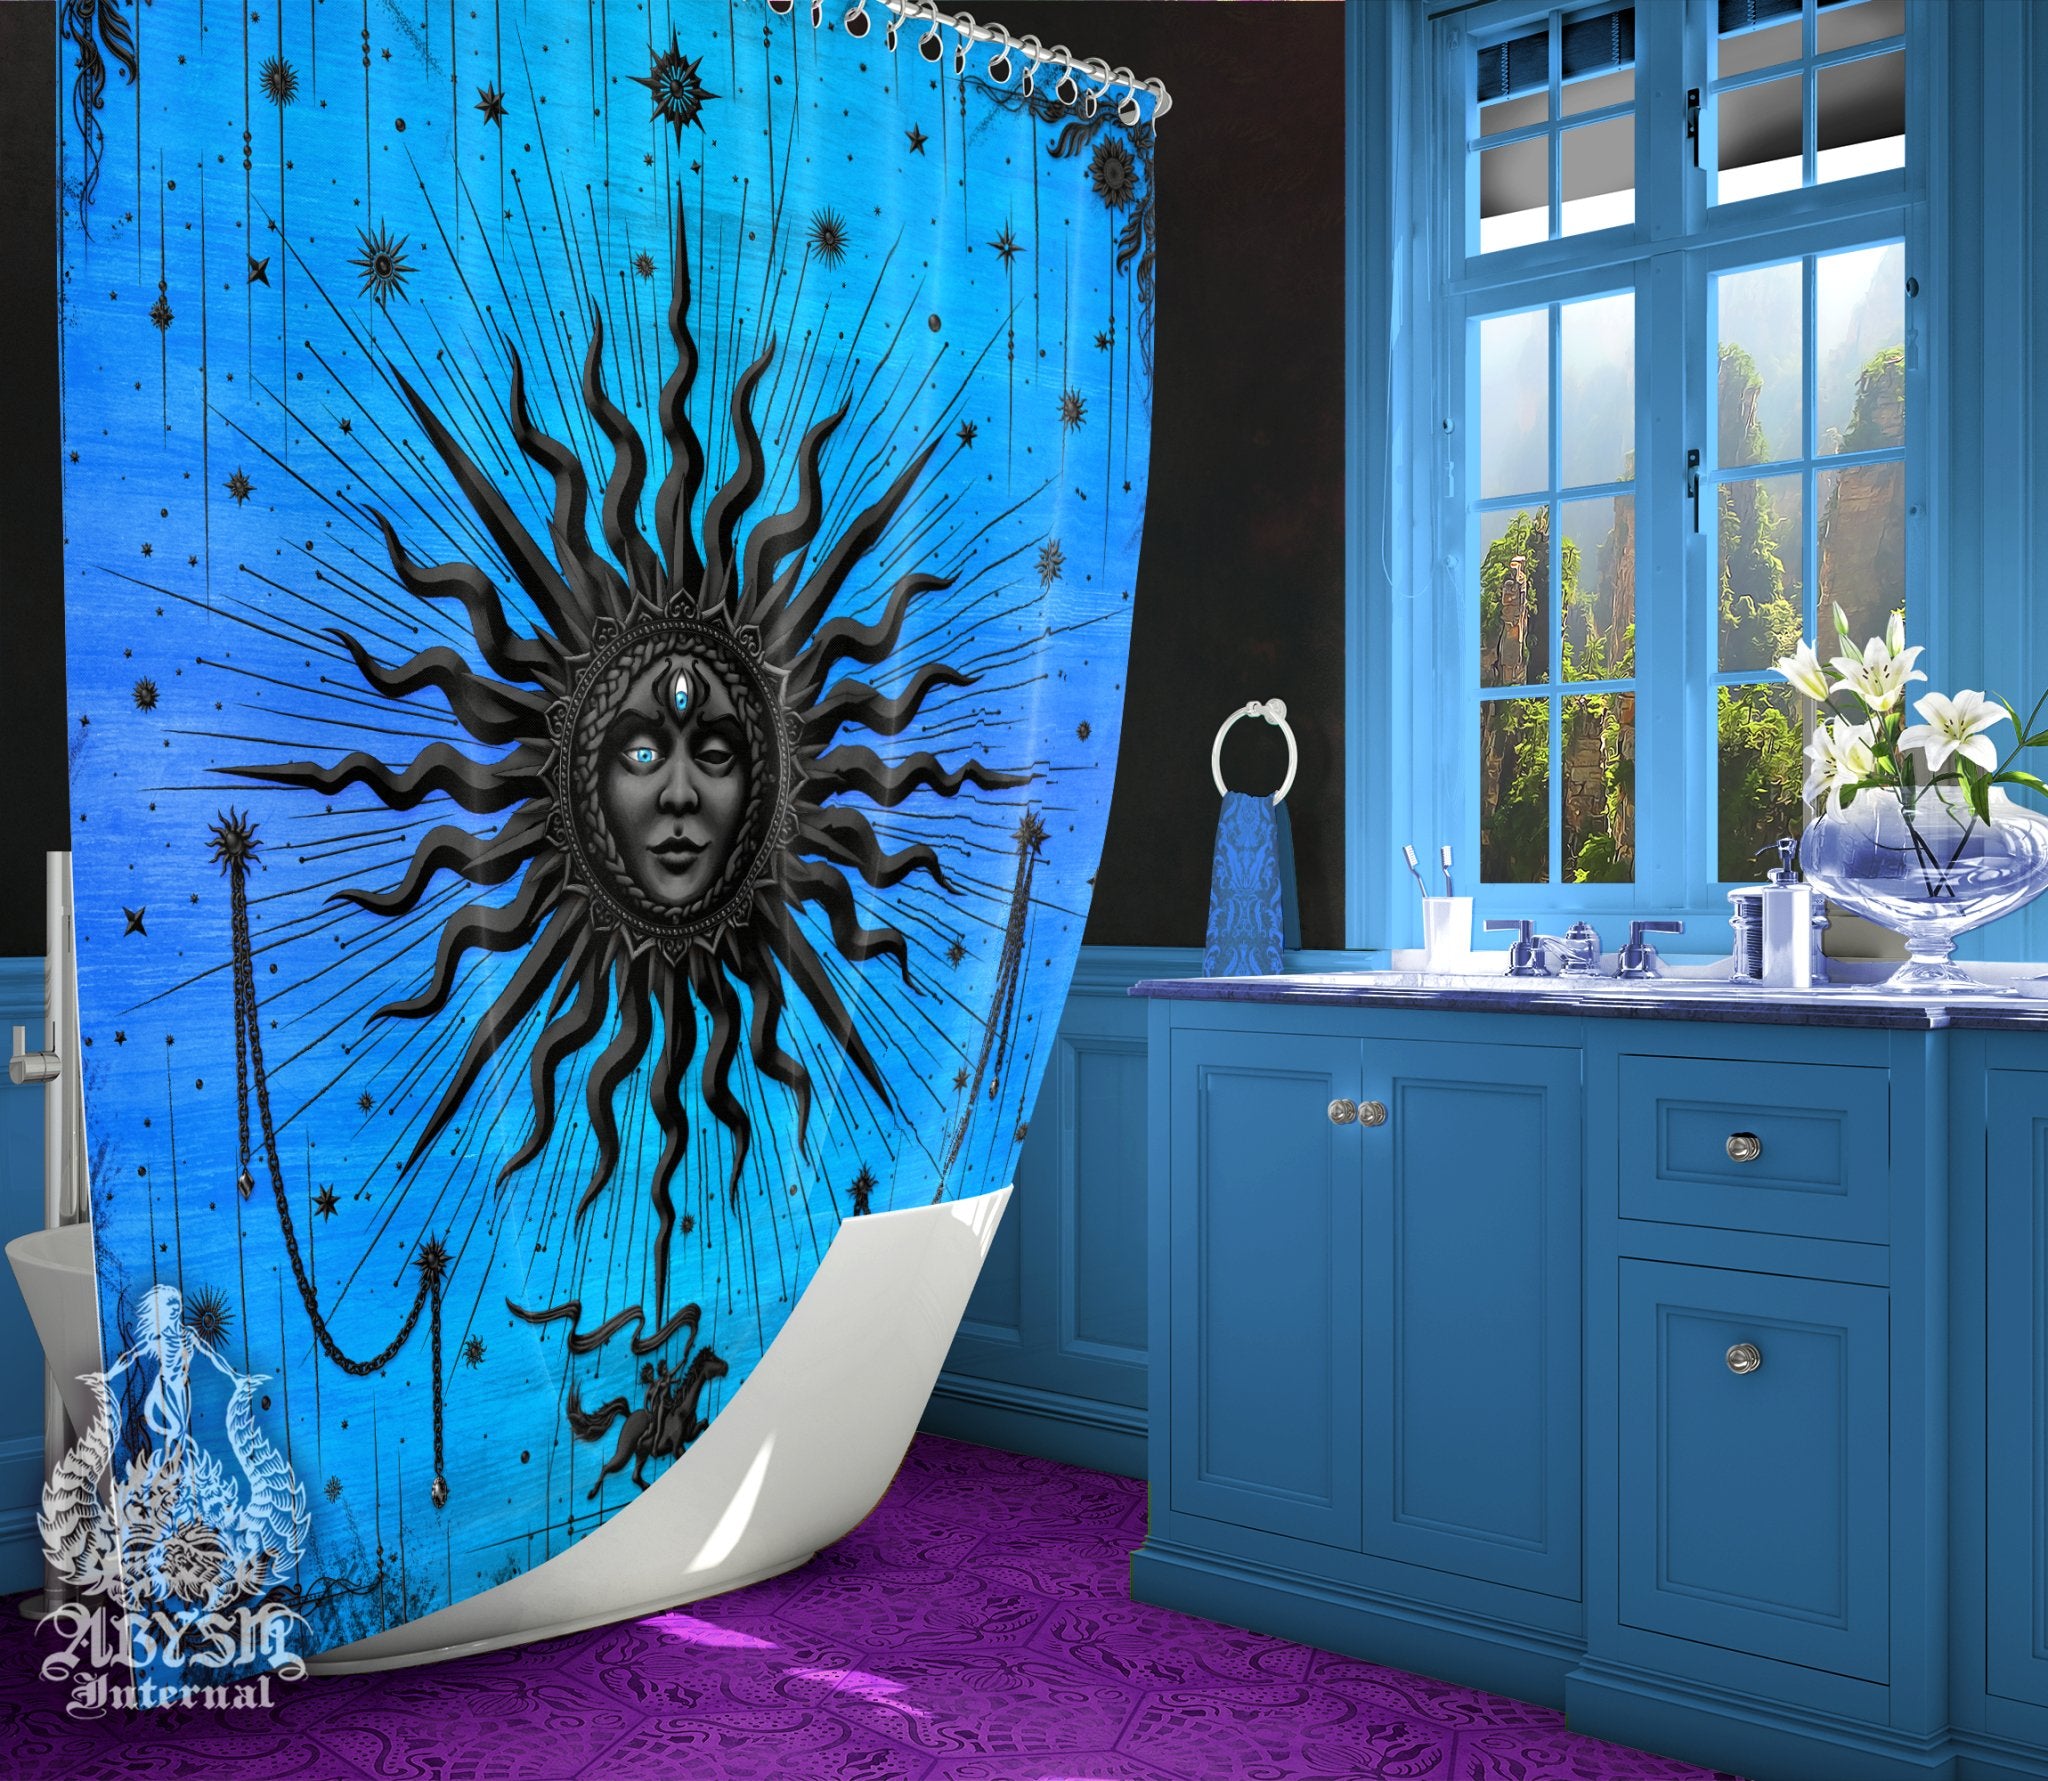 Black Sun Shower Curtain, 71x74 inches, Indie Bathroom Decor, Tarot Arcana, Esoteric Art Print, Boho Home - Cyan Blue - Abysm Internal